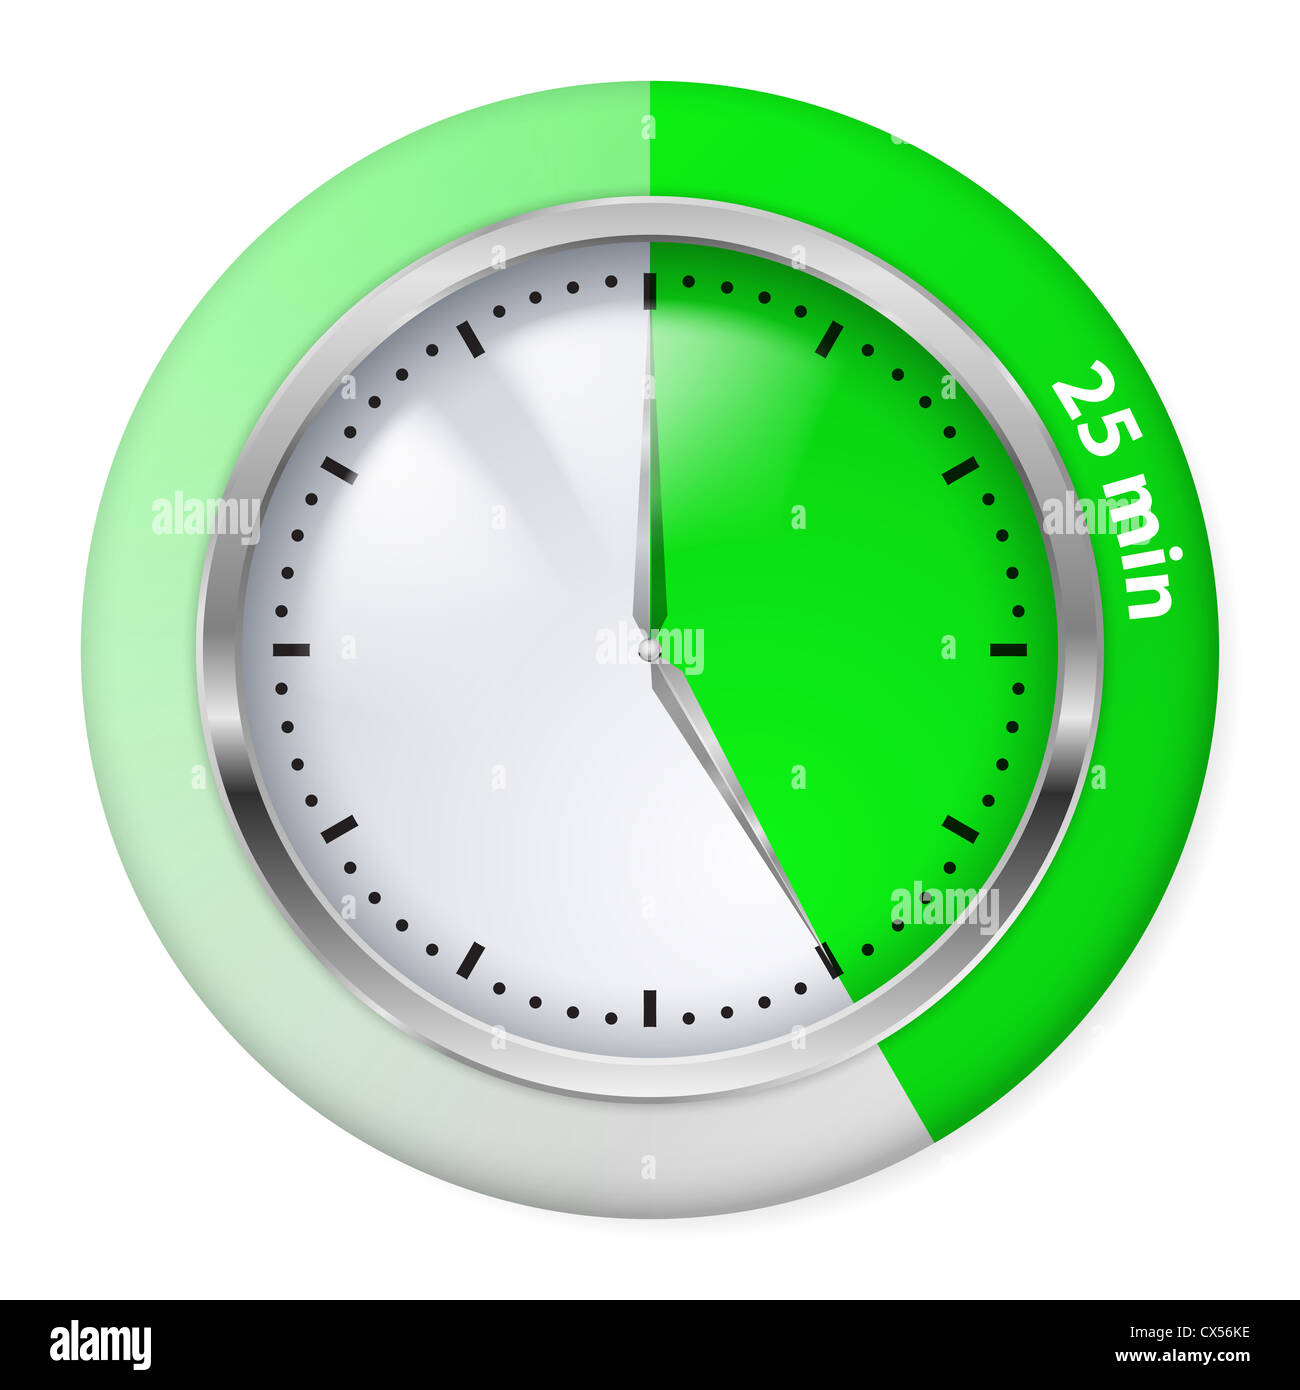 https://c8.alamy.com/comp/CX56KE/green-timer-icon-twenty-five-minutes-illustration-on-white-CX56KE.jpg